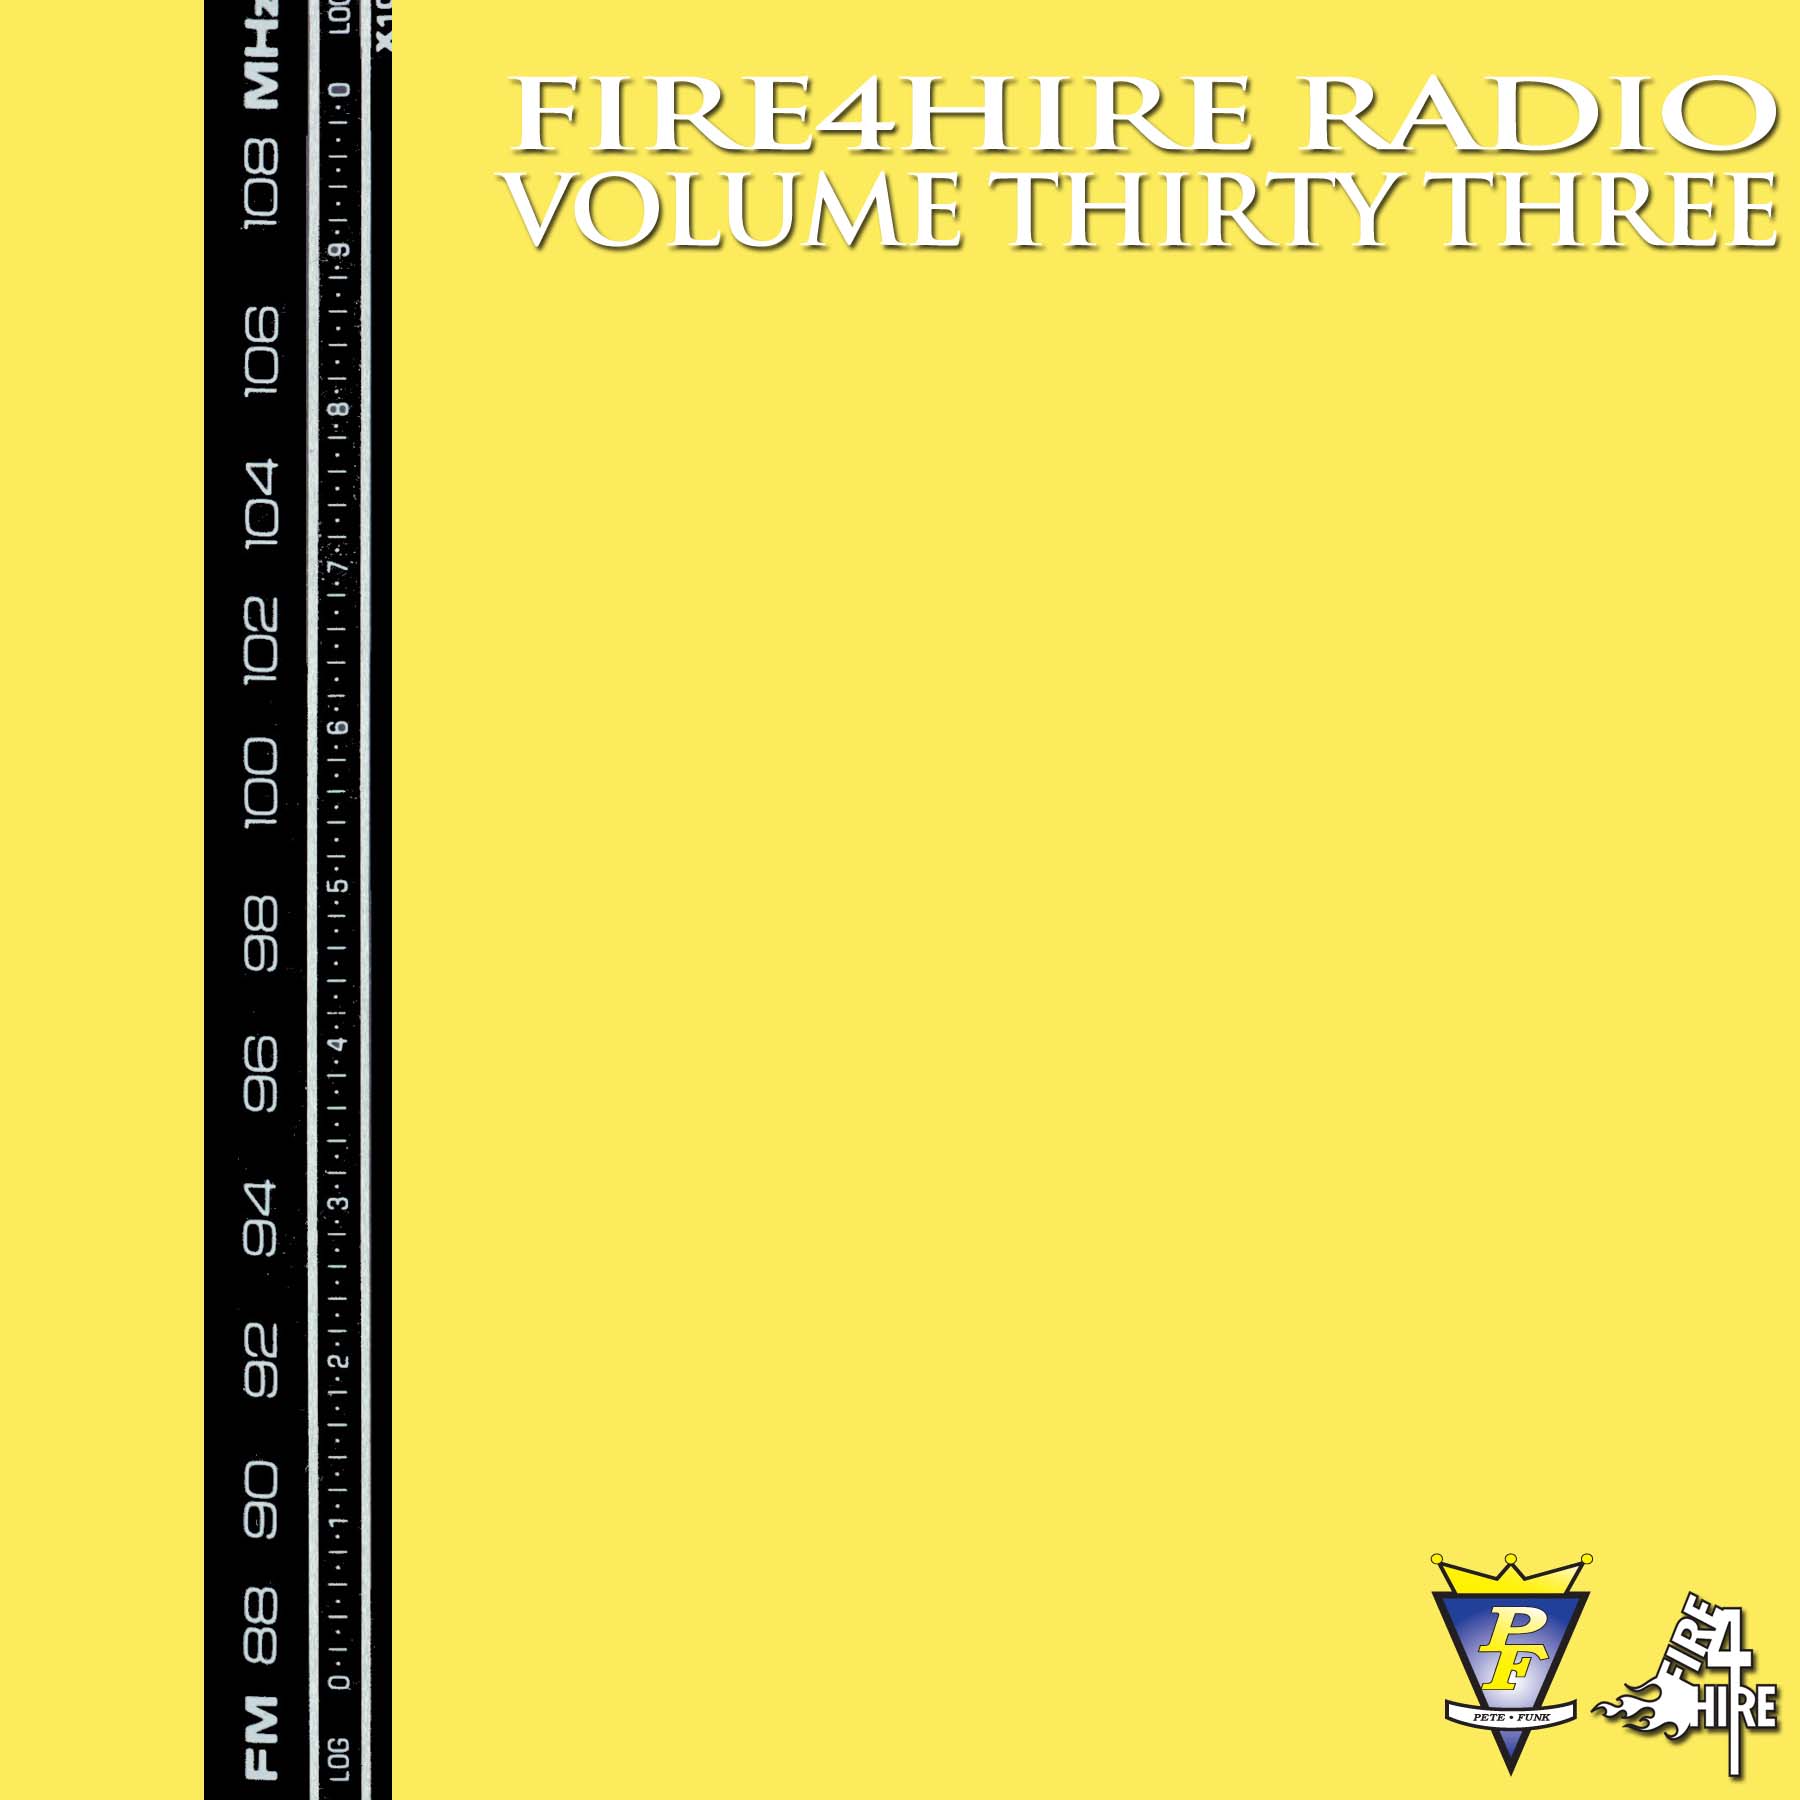 Pete FUnk FIre 4 Hire Radio Volume 33 Mixtape Mixcloud